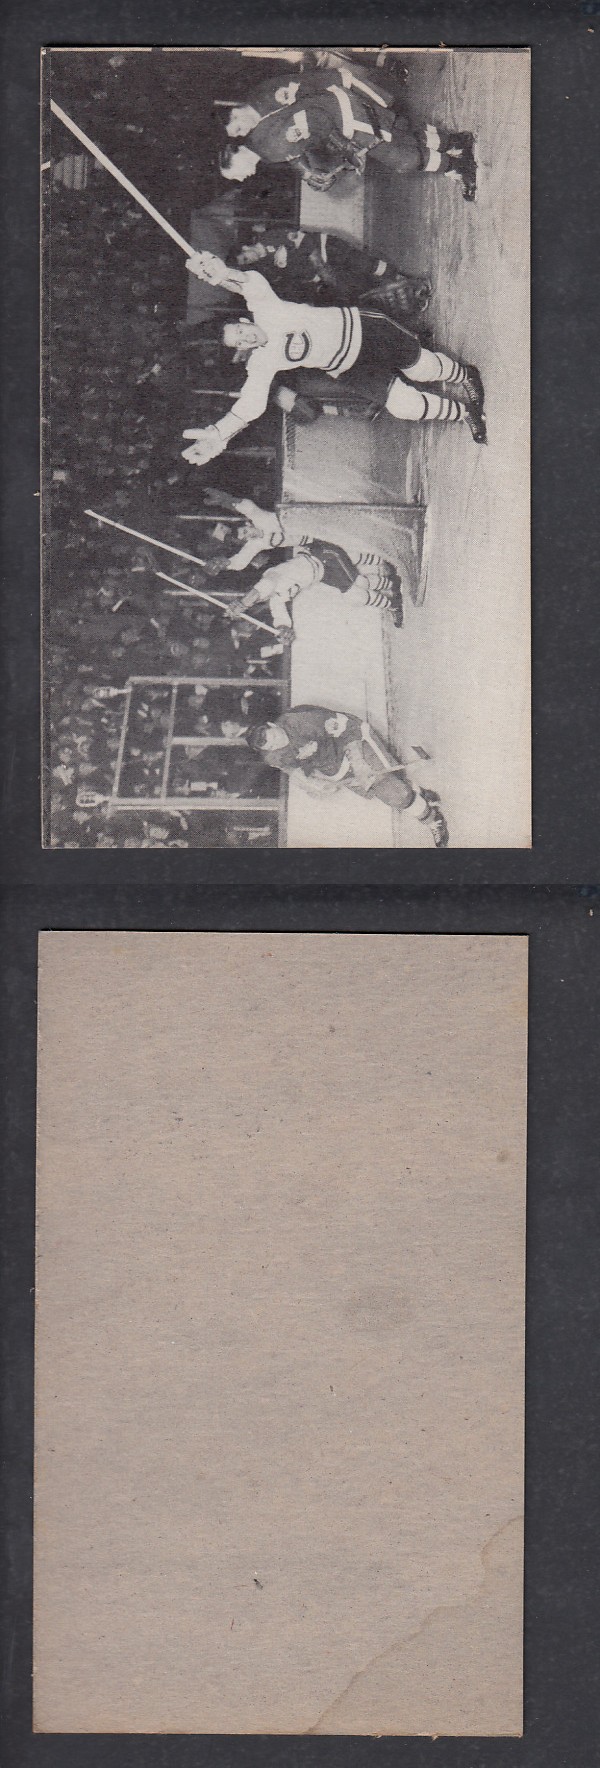 1948-52 EXHIBITS HOCKEY CARD CANADIENS SCORE photo